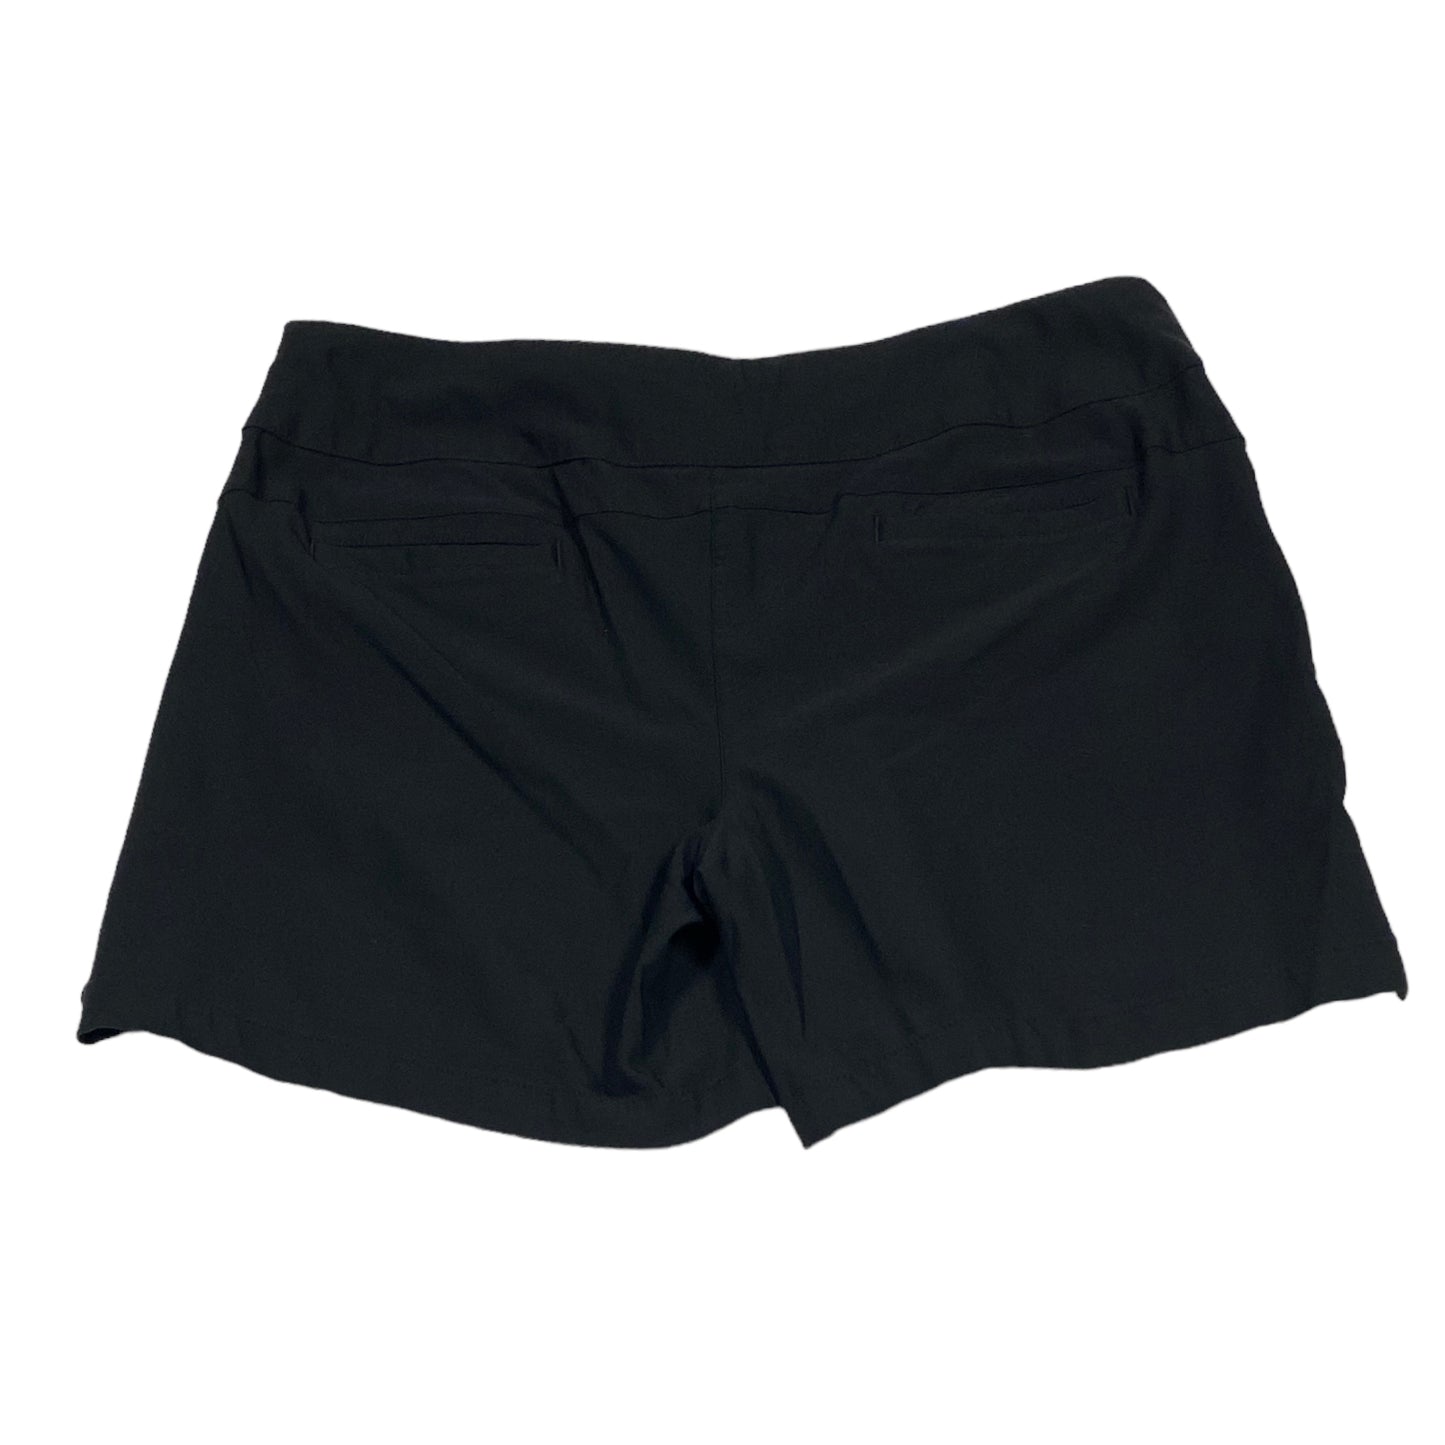 Athletic Shorts By Lady Hagen  Size: Xl